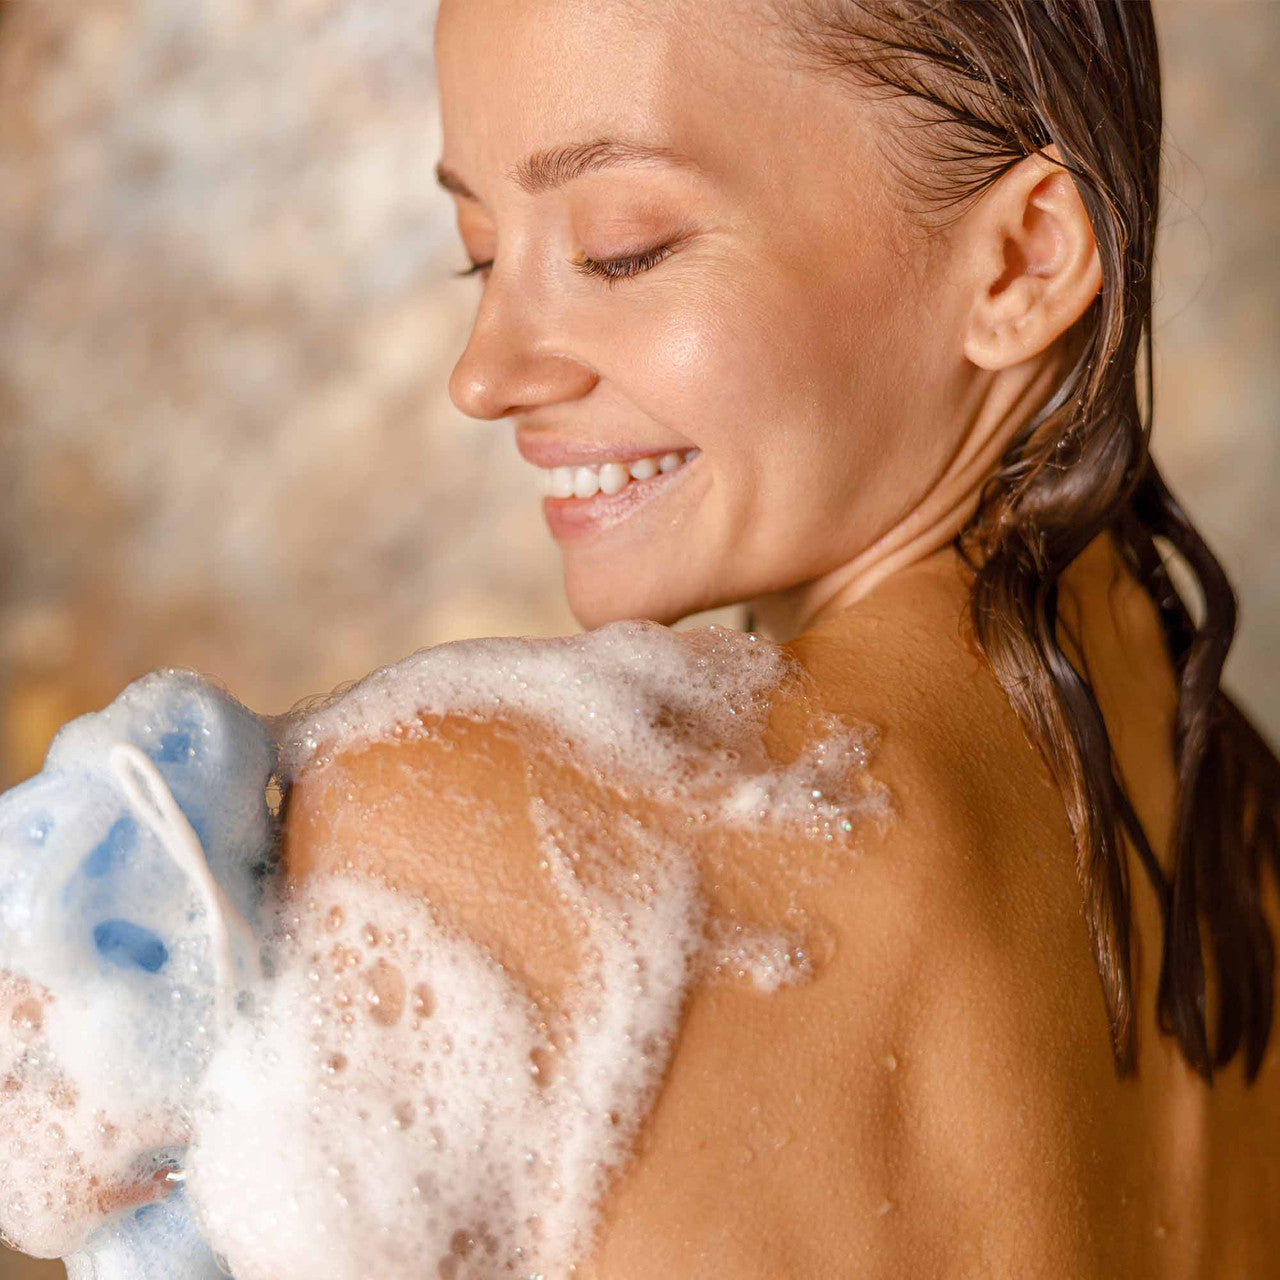 Deep Steep Woman Washing Body with Body Wash